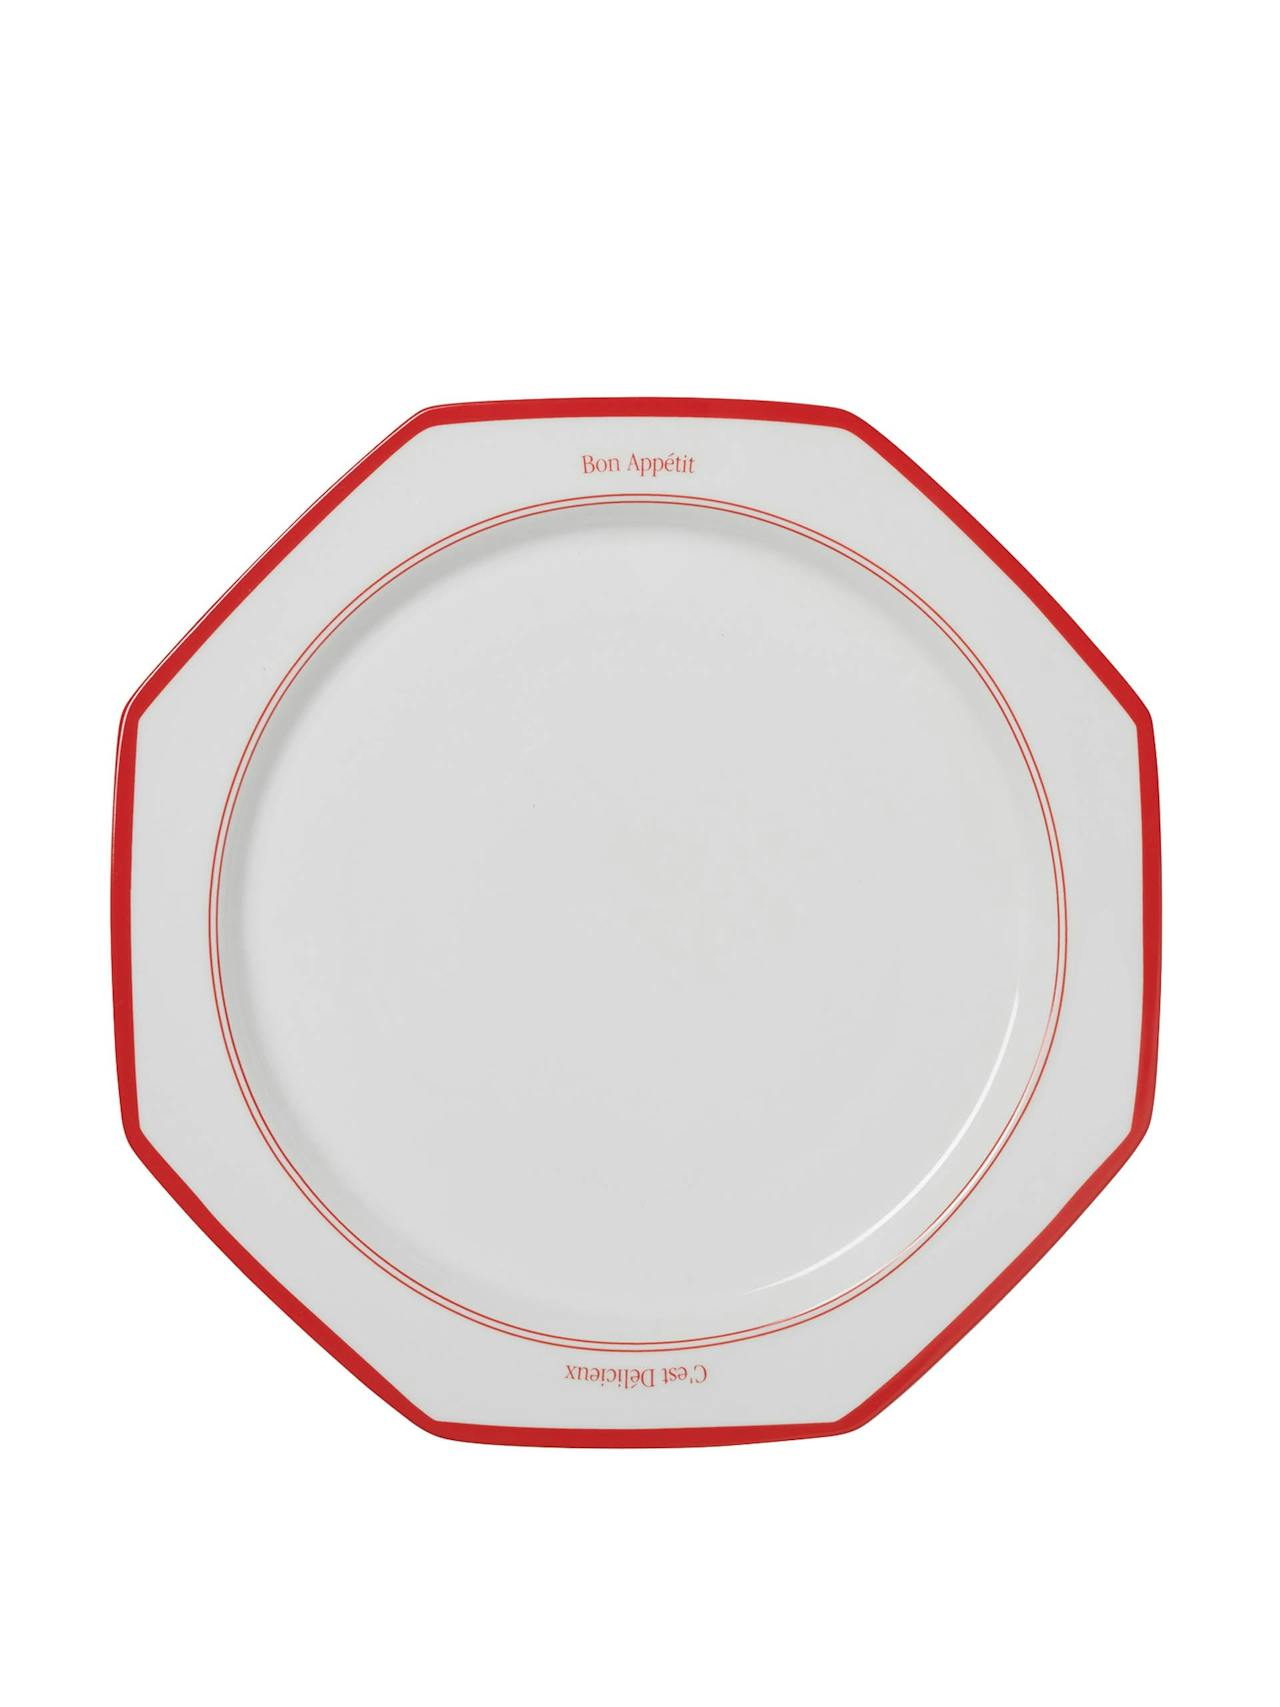 Red bon appétit octagonal plate set